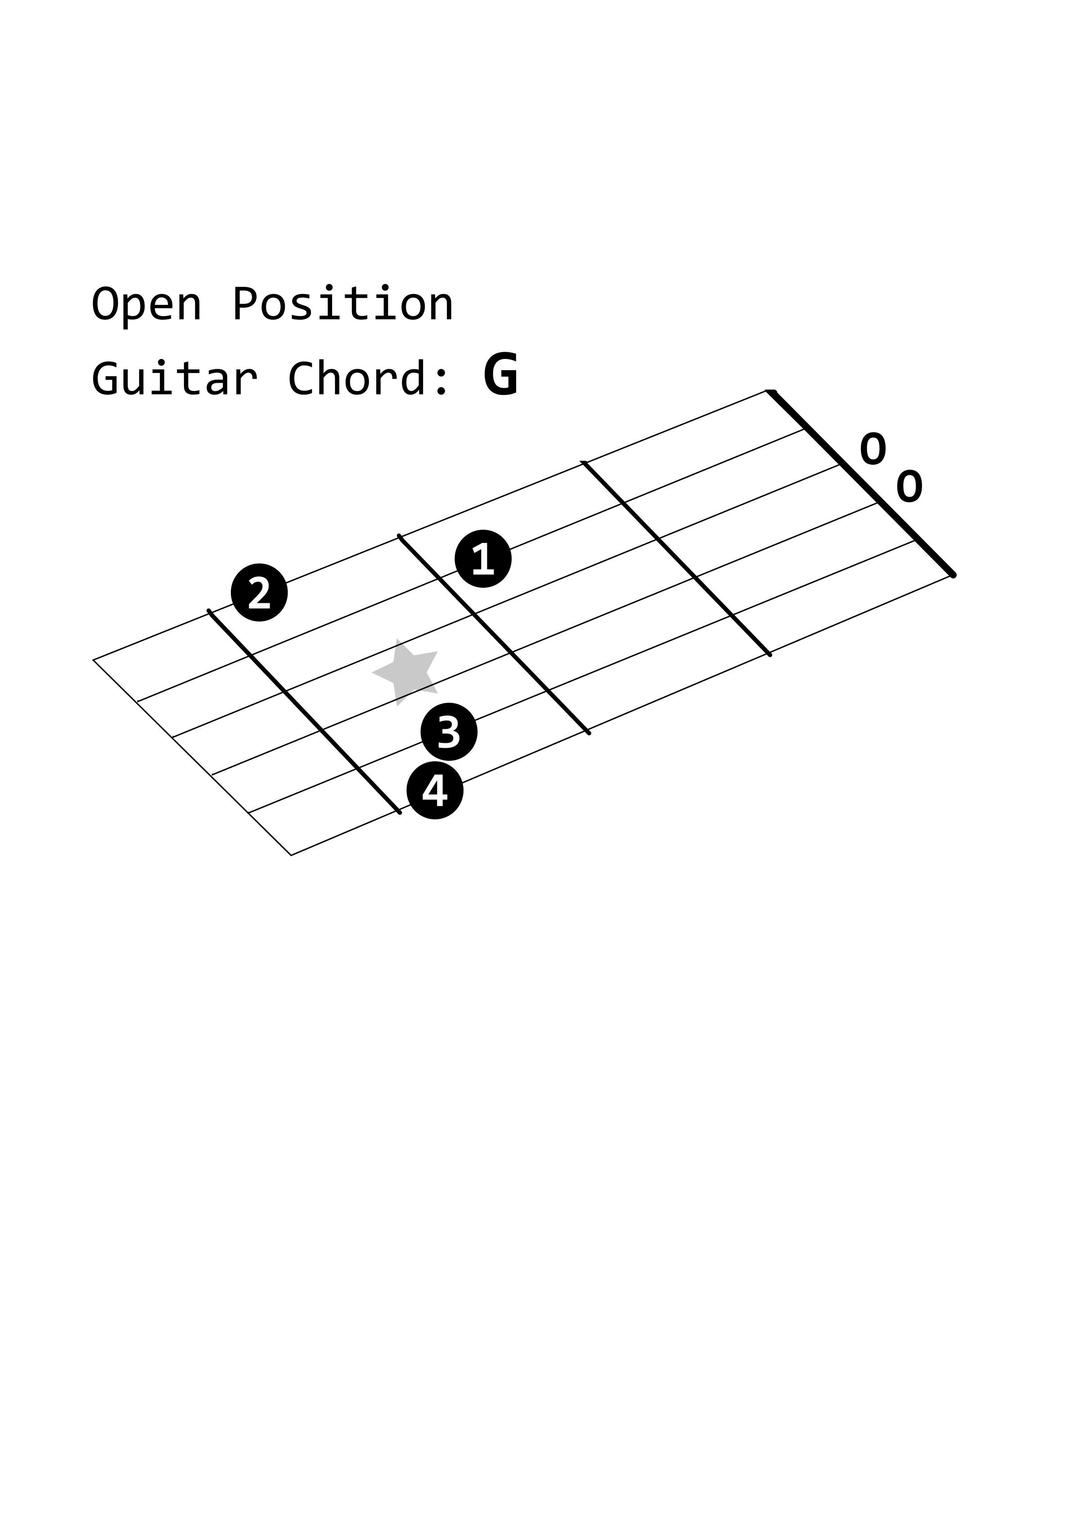 Open Position Guitar Chord png transparent